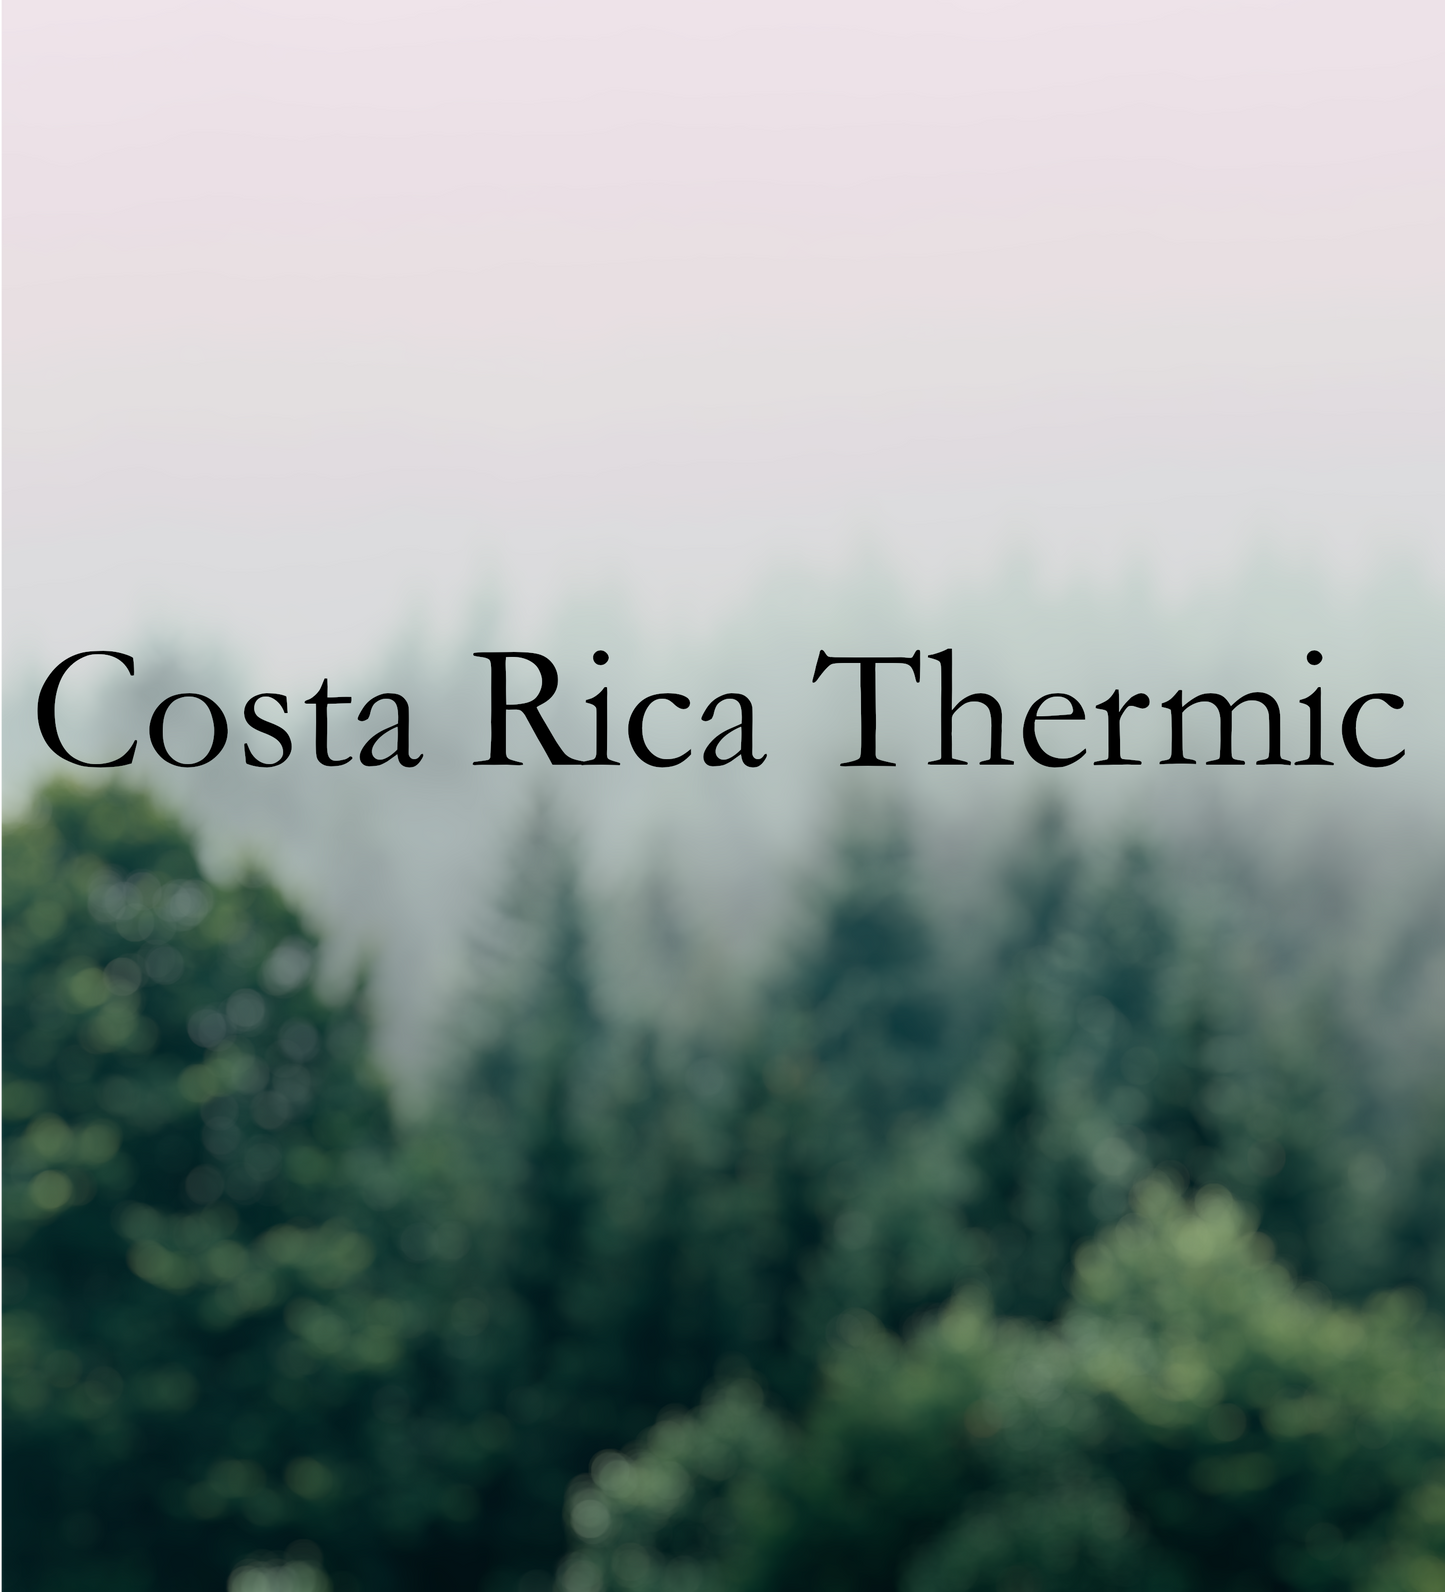 Costa Rica Thermic